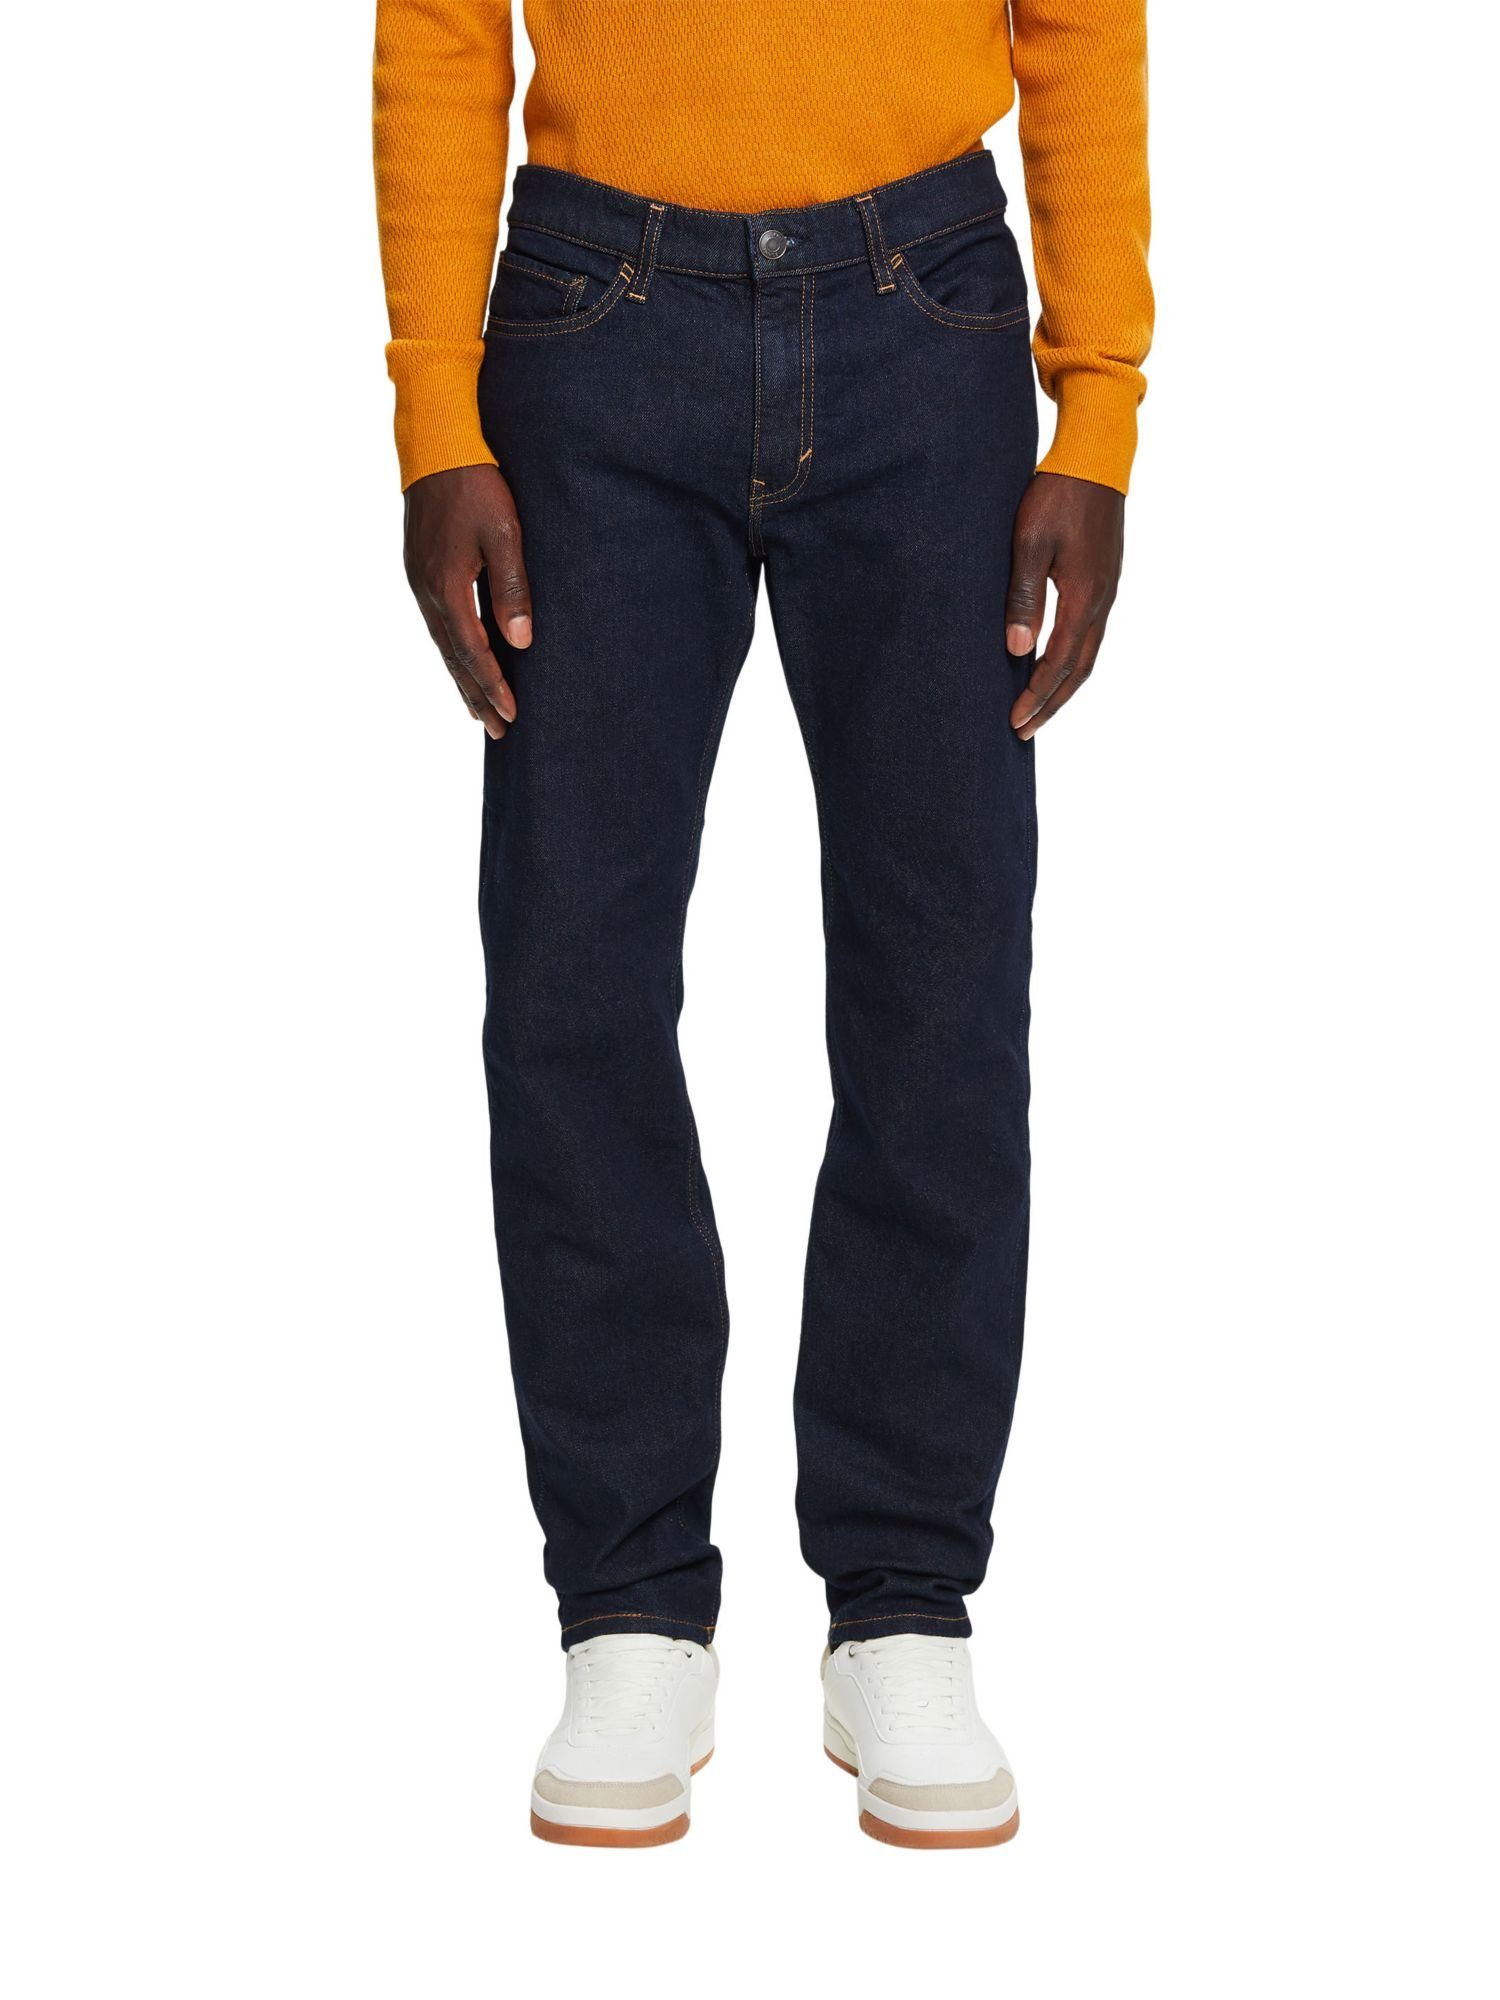 Passform mit Esprit Straight-Jeans gerader Recycelt: Jeans